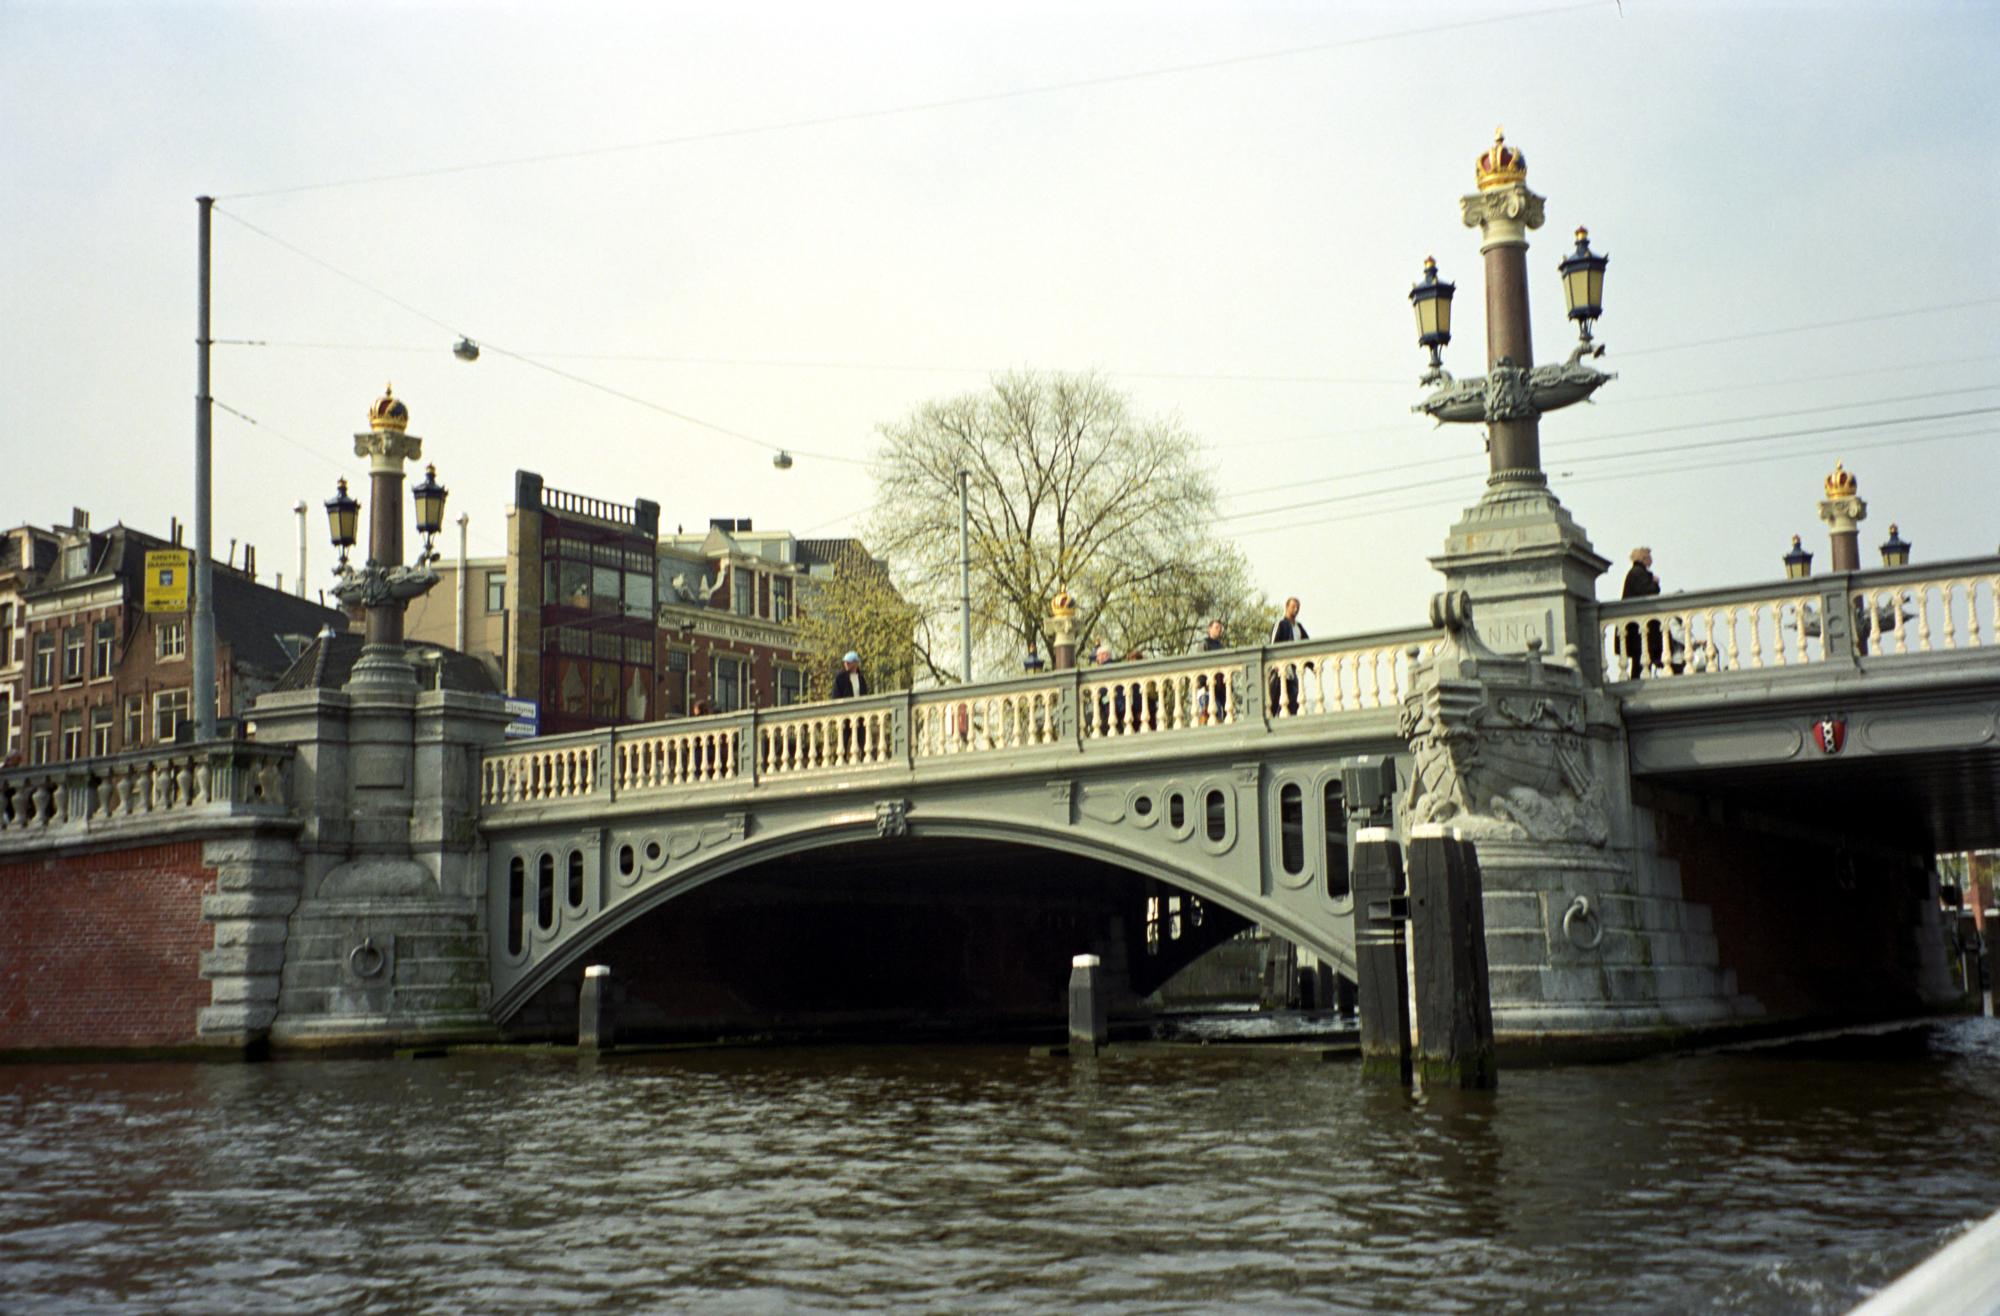 The Netherlands - Bridge Amsterdam #1